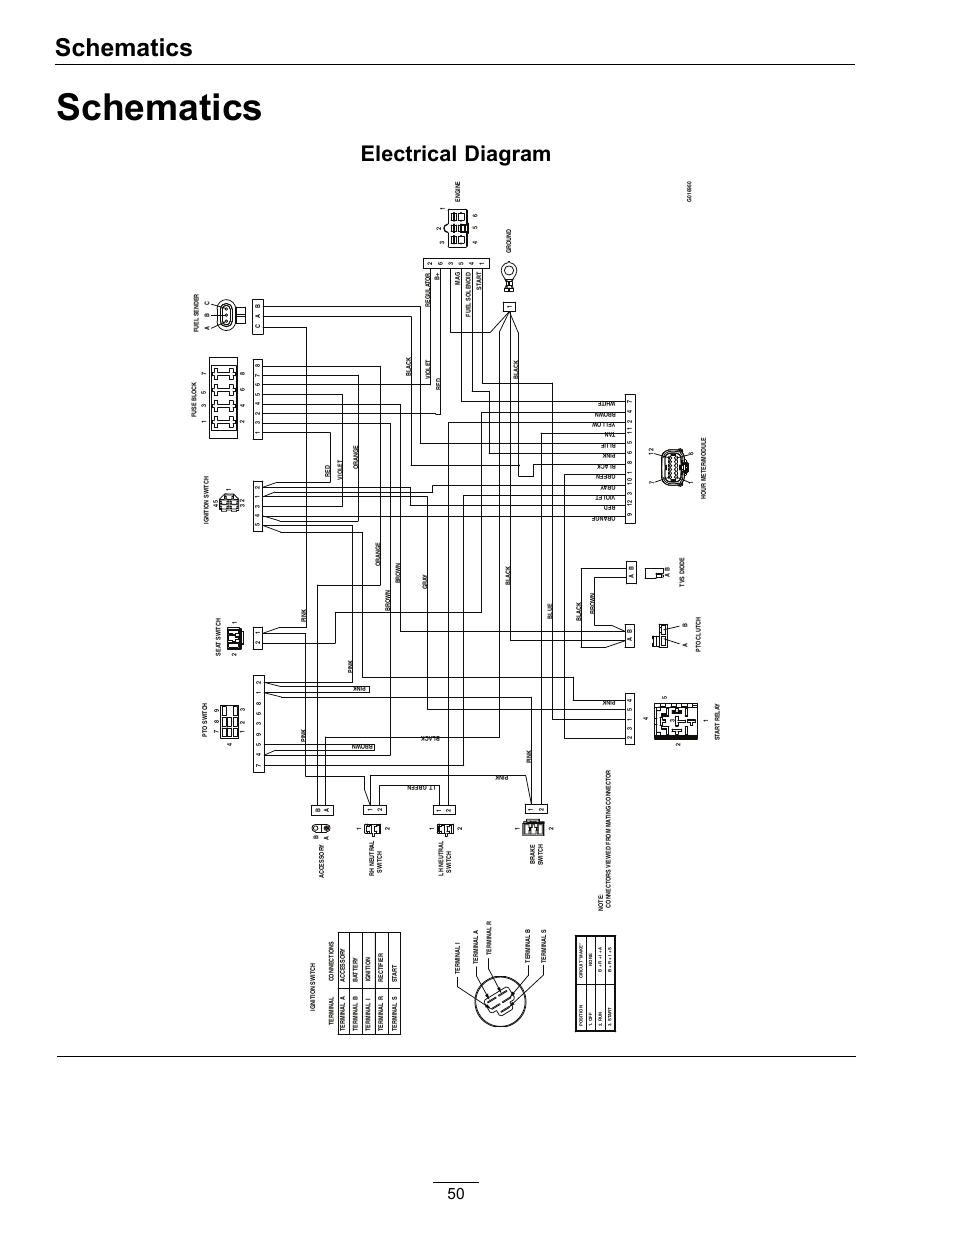 1956 ford fairlane generator wiring diagram